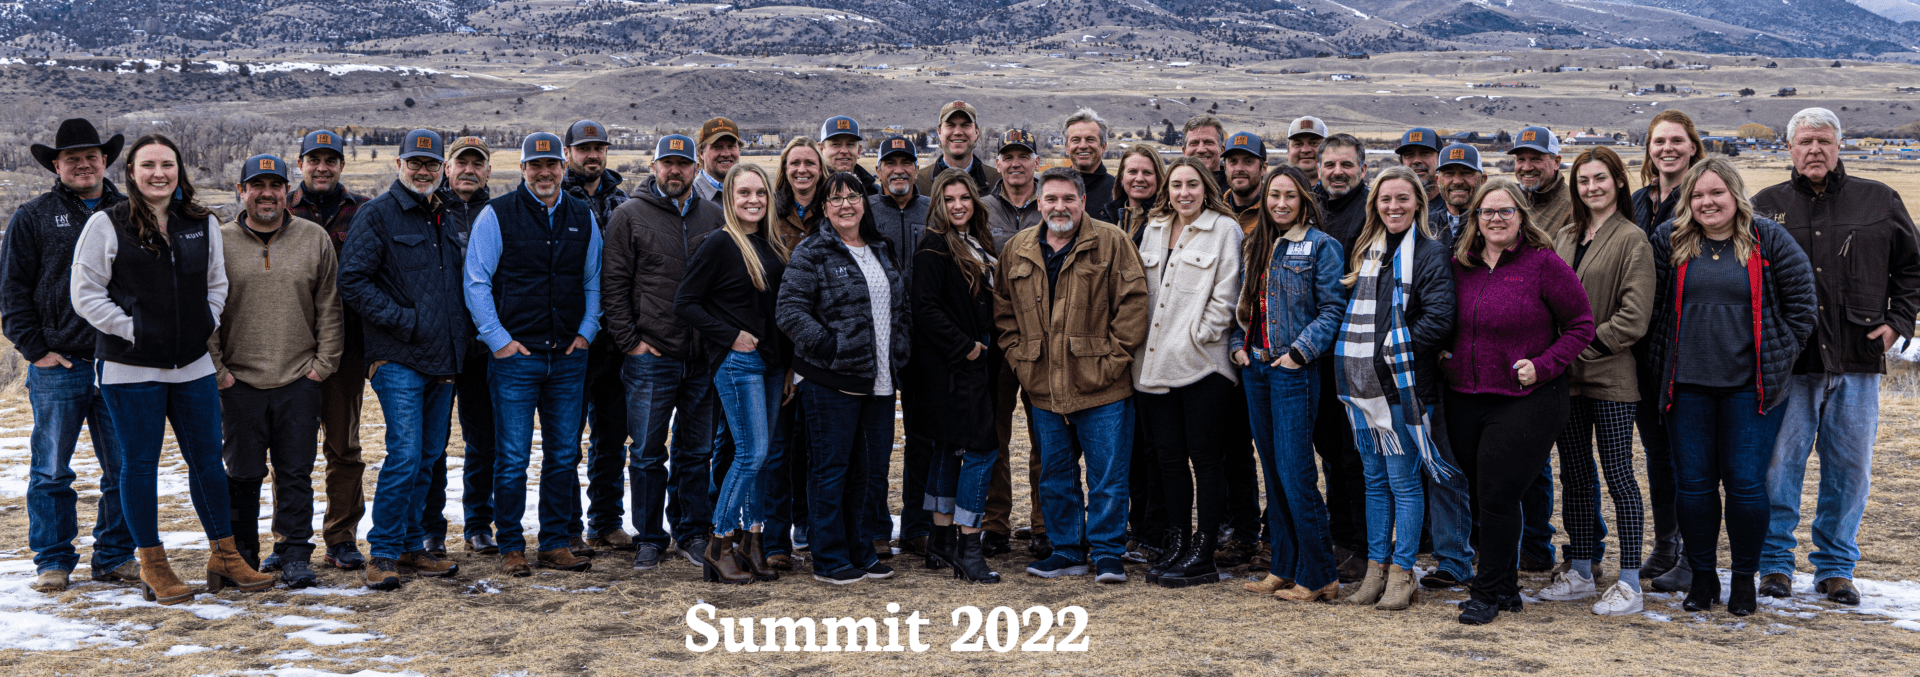 group photo fay ranches summit 2022